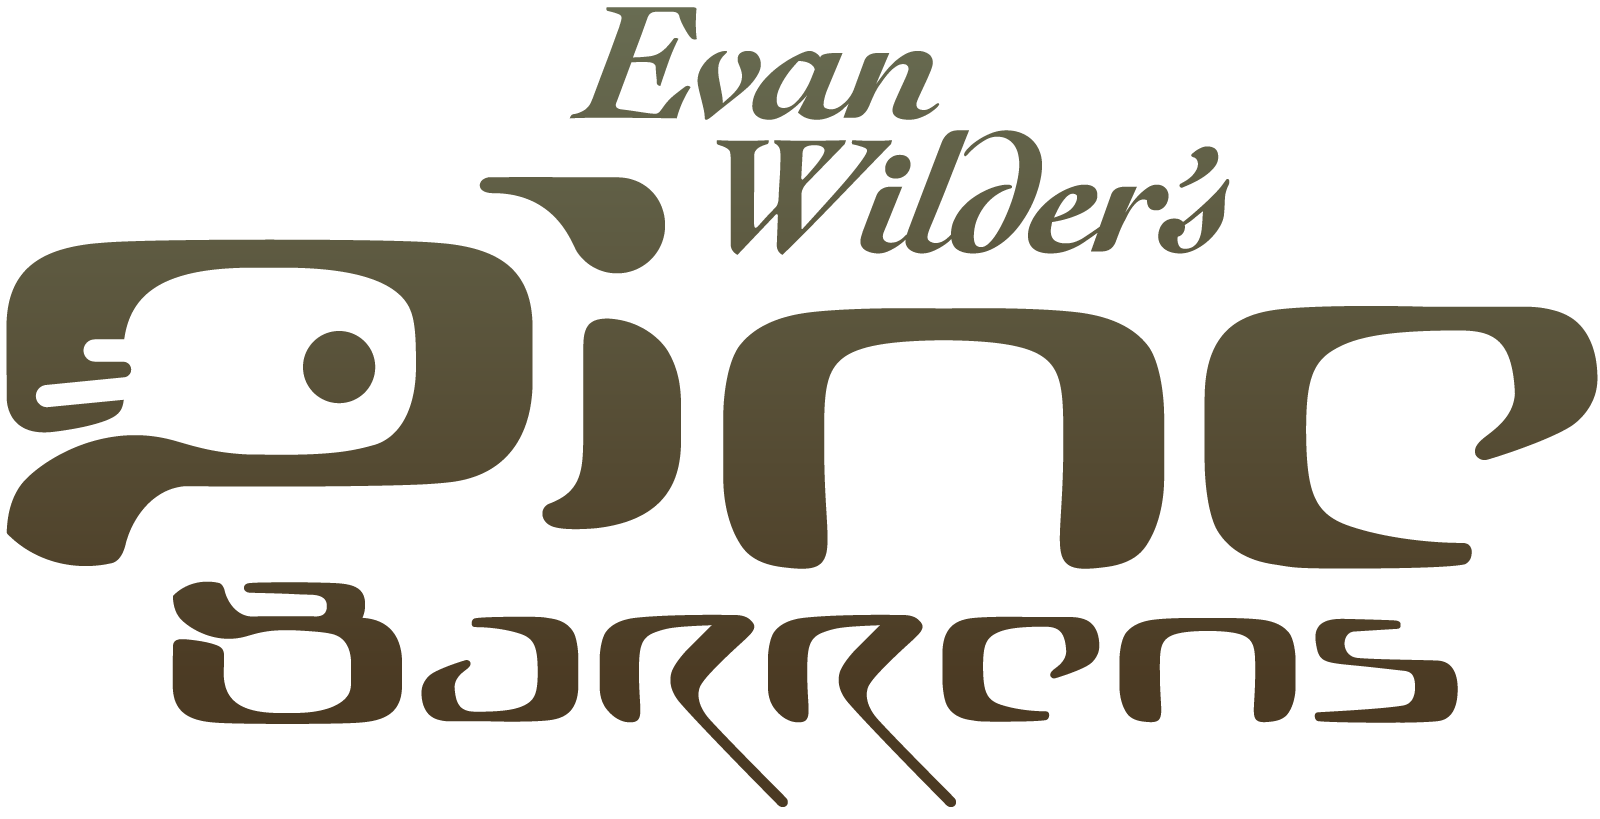 Eastern Thunder presents Evan Wilder's Pine Barrens.